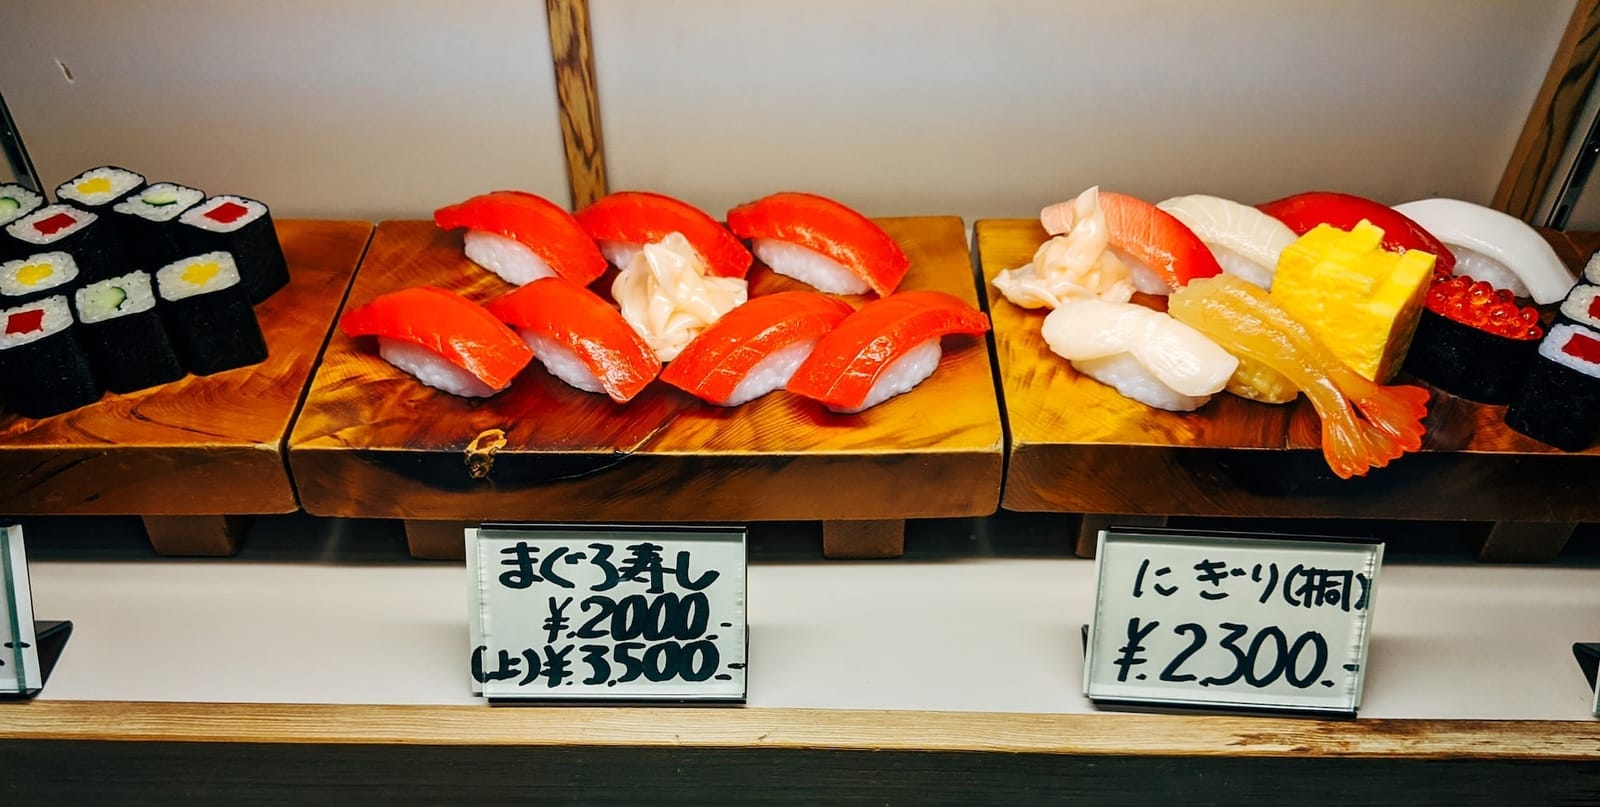 Assorted sushi nigiri and sashimi sushi on a wooden shelf.